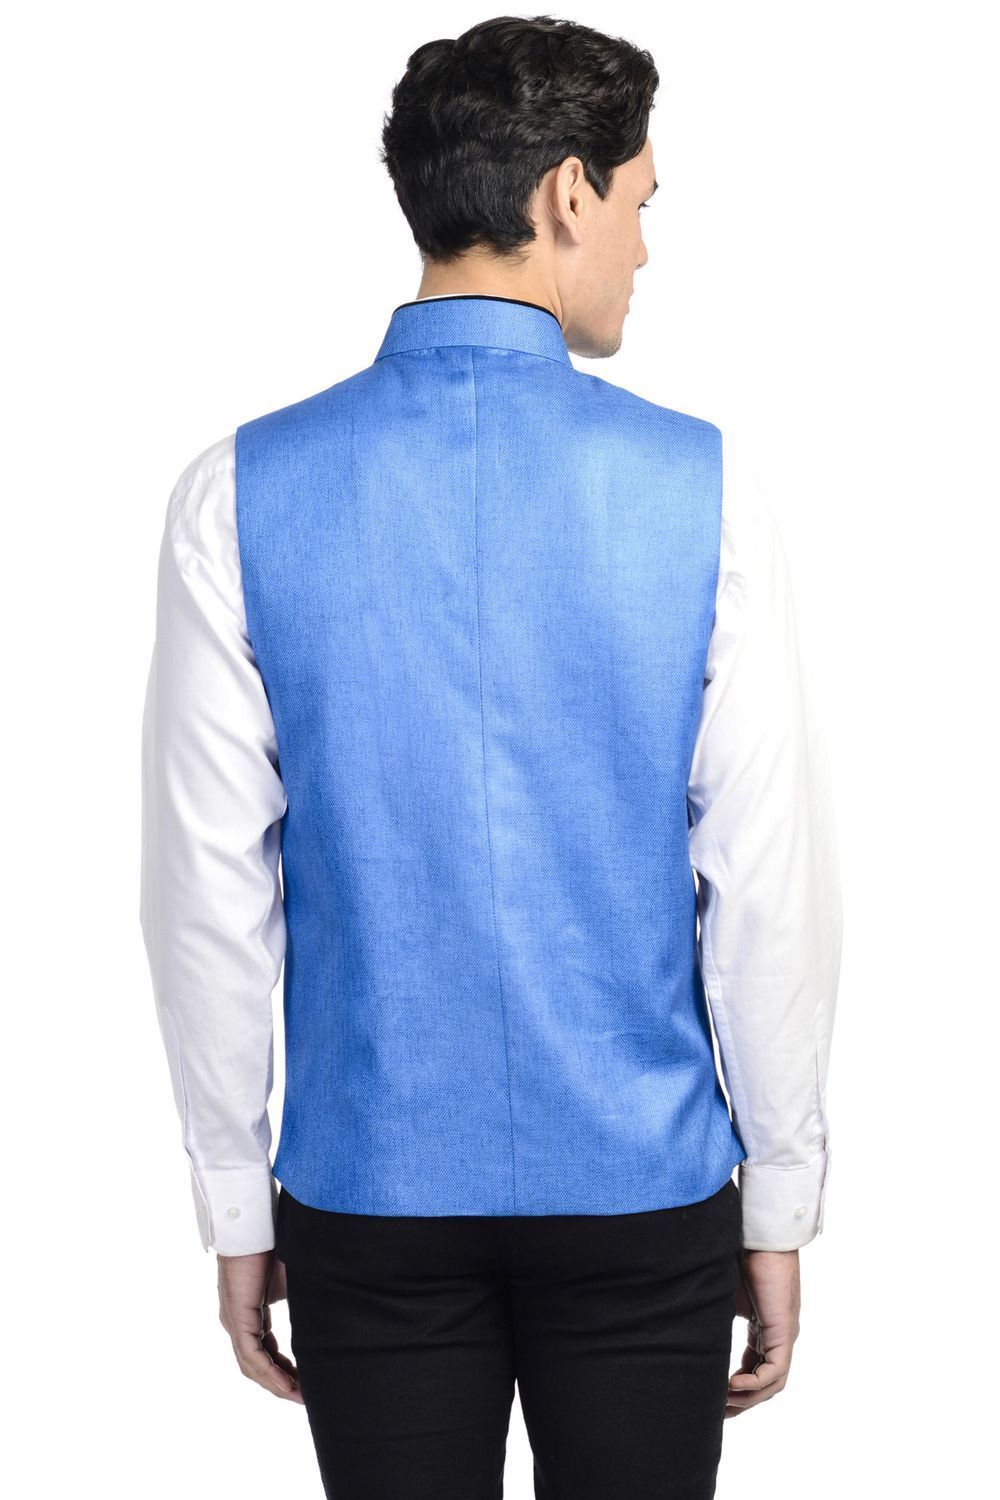 Rayon Blue Nehru Jacket